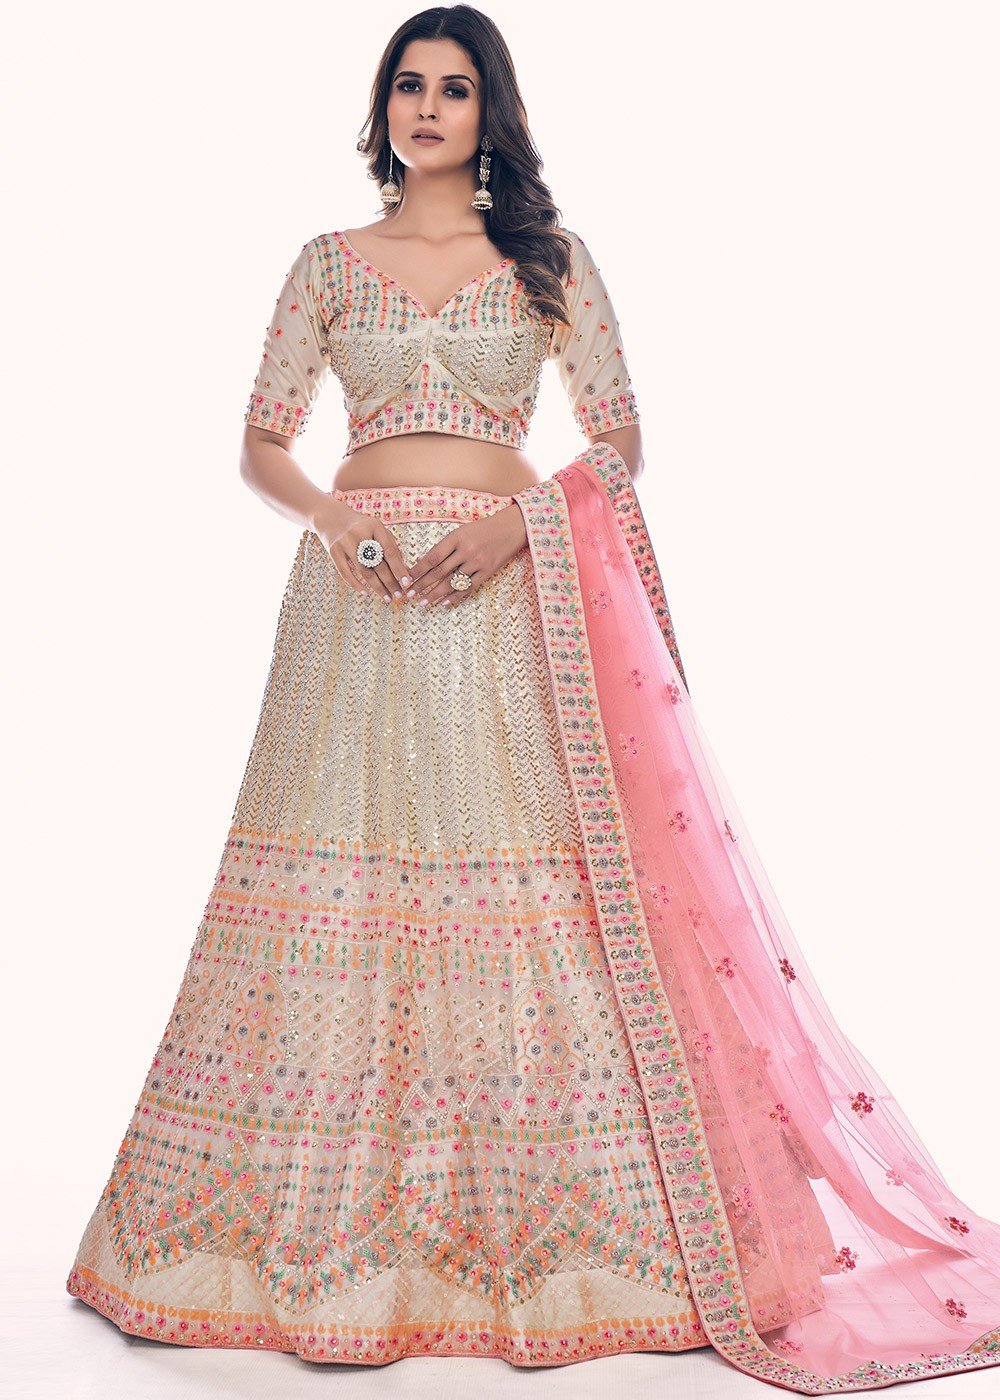 Photo of cream and pink lehenga | Indian wedding wear, Indian fashion,  Indian designer outfits